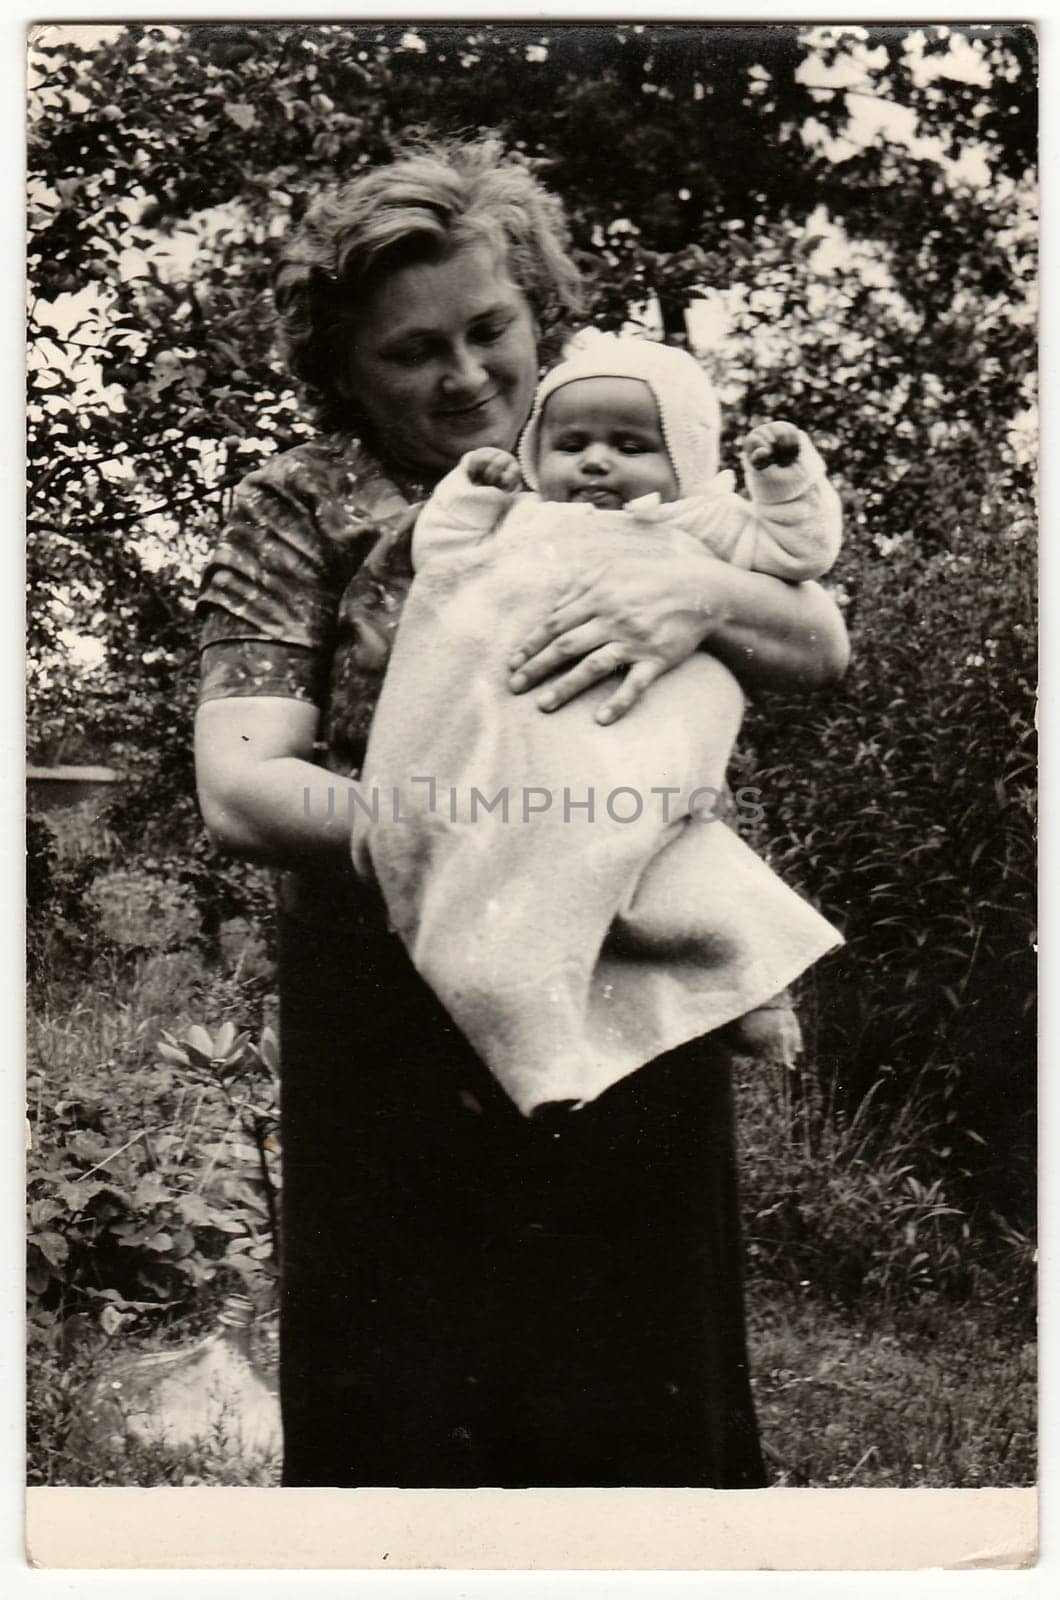 THE CZECHOSLOVAK SOCIALIST REPUBLIC - 1960s: Vintage photo shows young woman cradles baby.